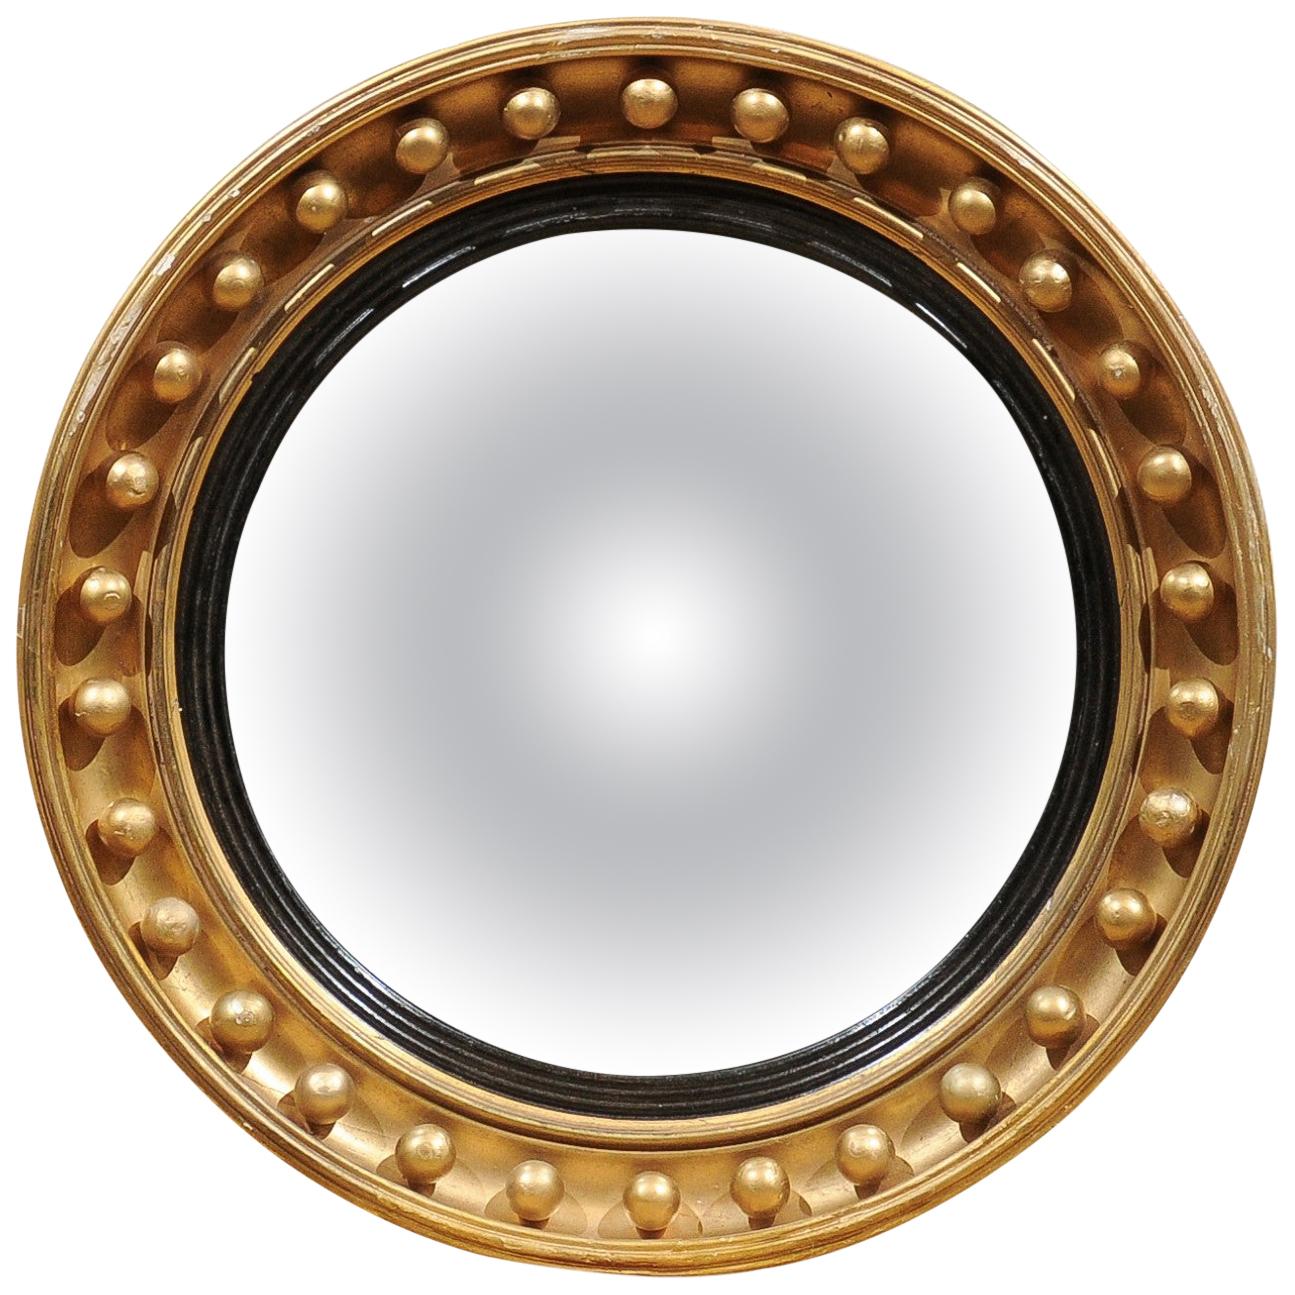 Mid-19th Century English Giltwood Bull's Eye Mirror with Convex Mirror